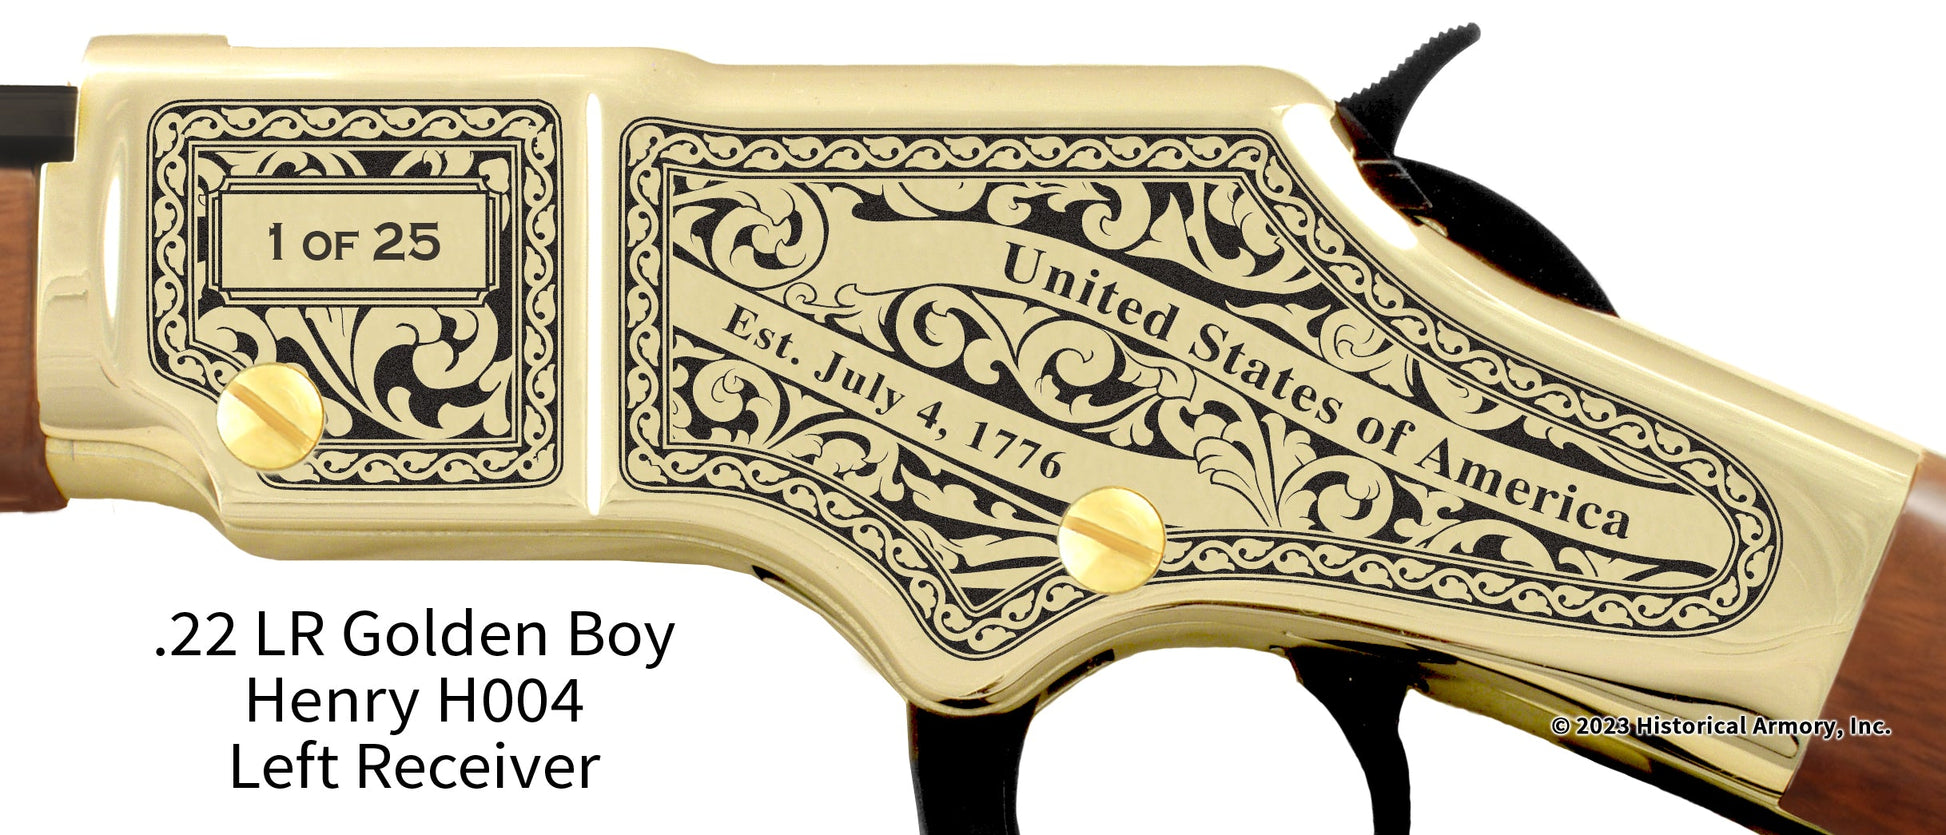 Butler County Iowa Engraved Henry Golden Boy Rifle